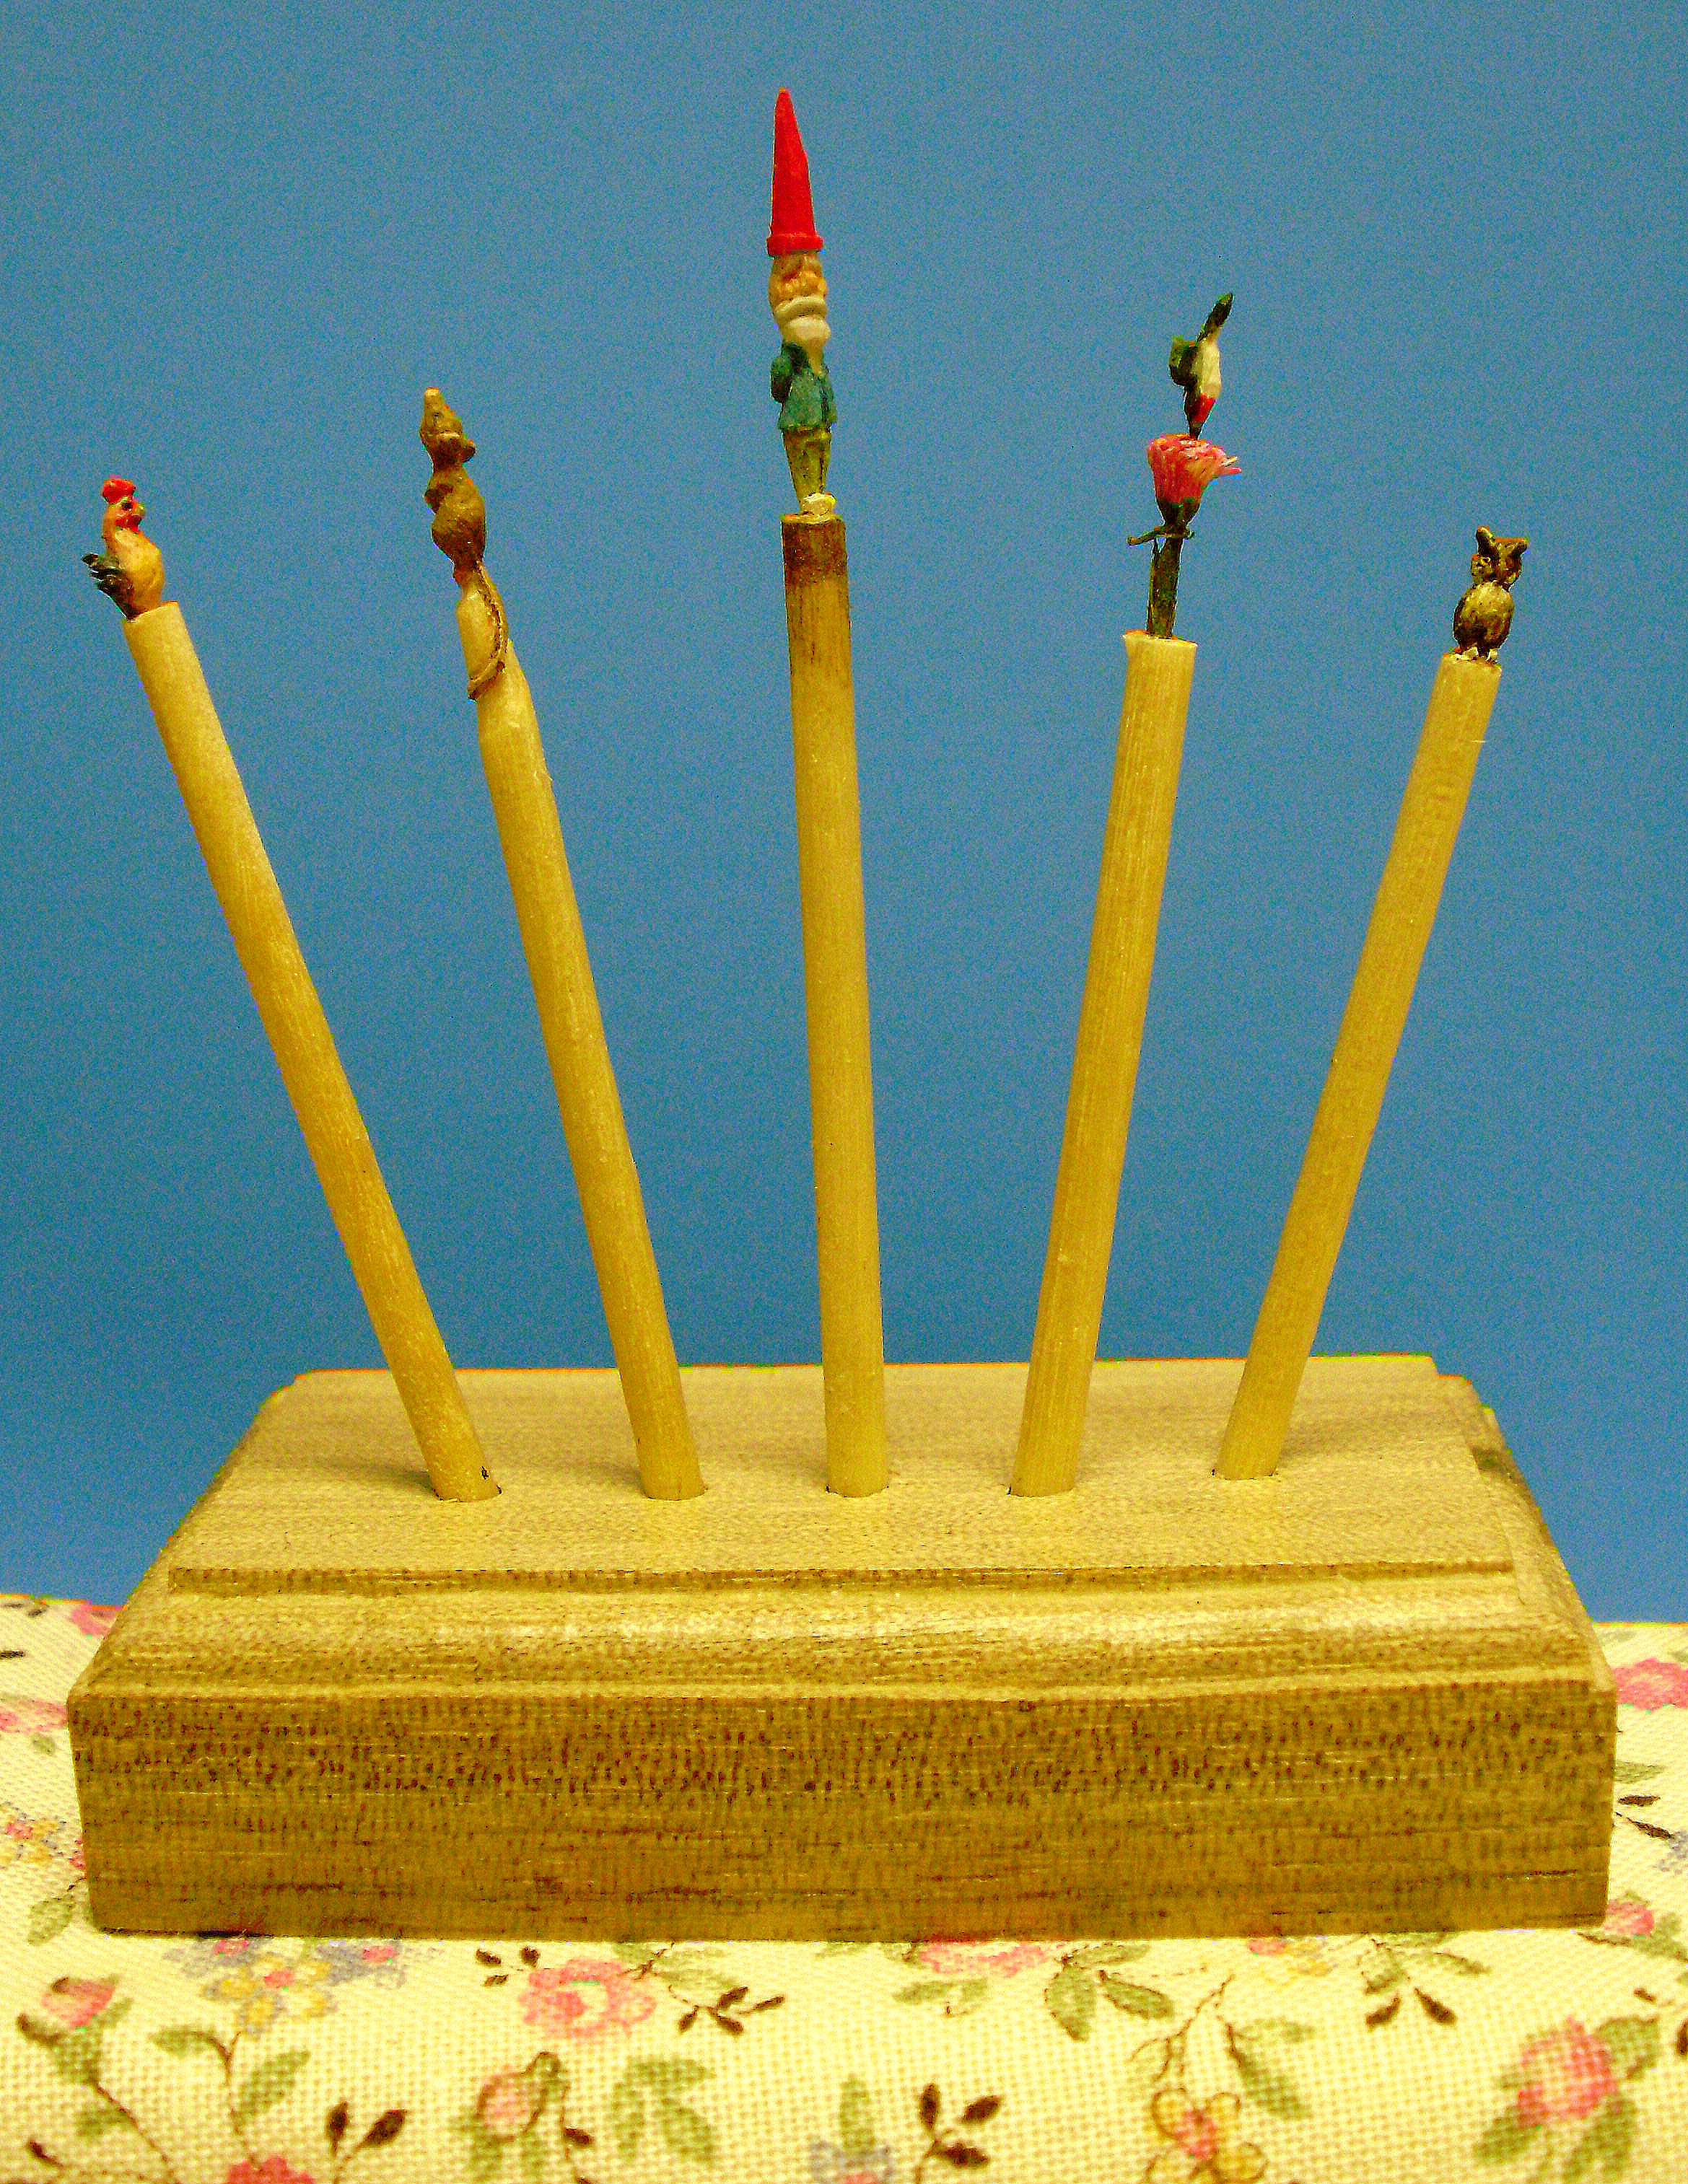 intricately carved toothpicks